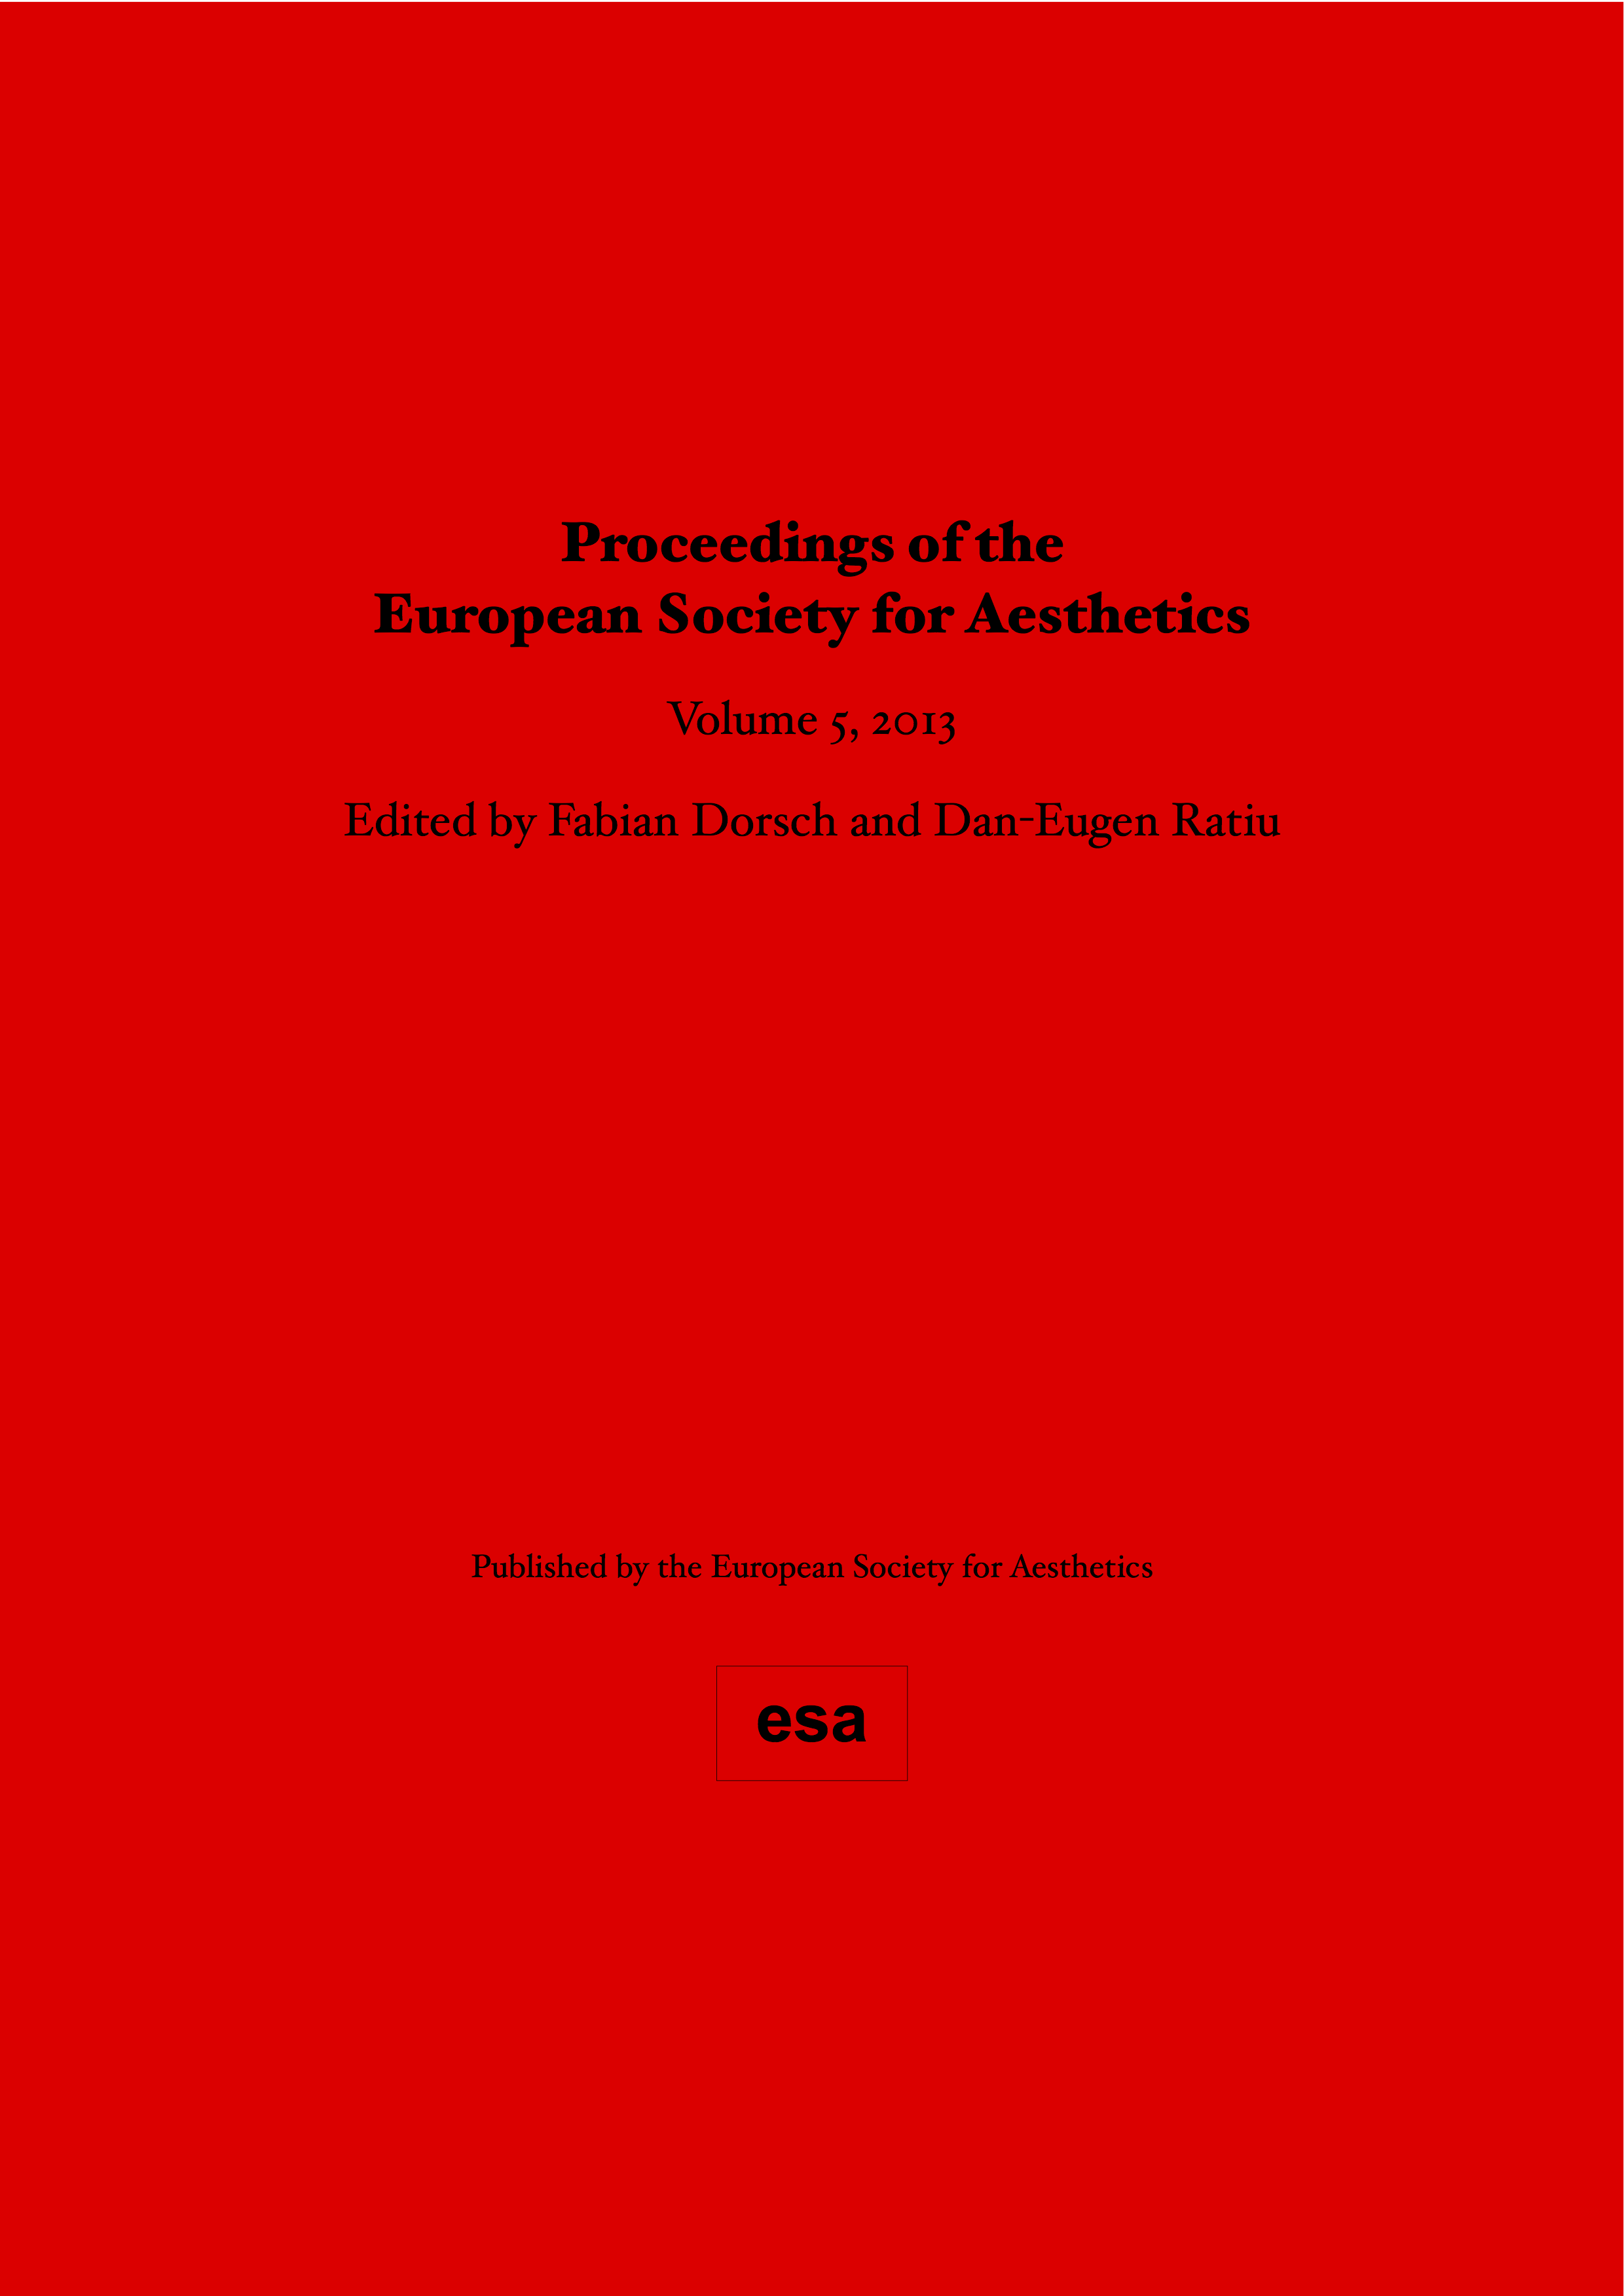 ESA Proceedings 2014 Volume 6 Cover